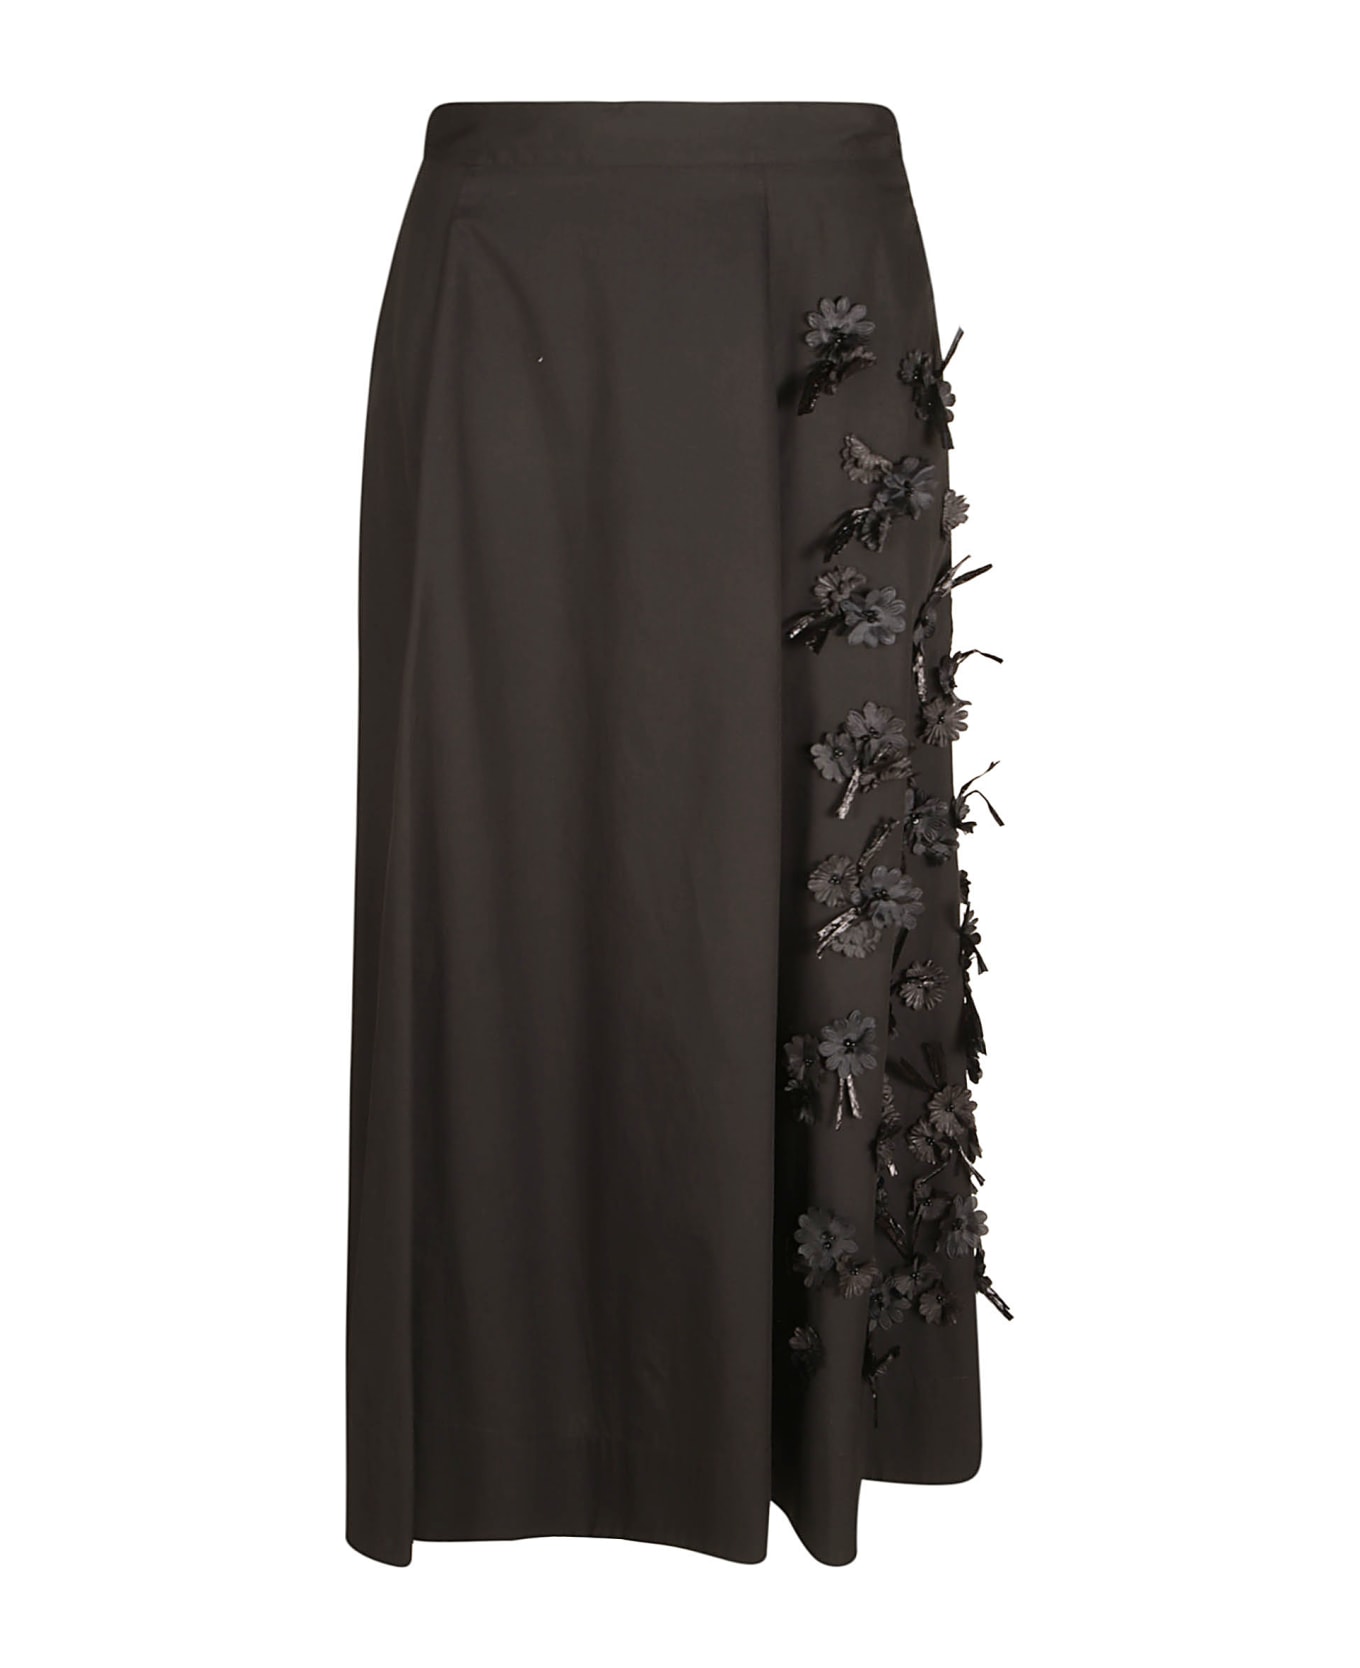 Lorena Antoniazzi Floral Long Skirt - Black